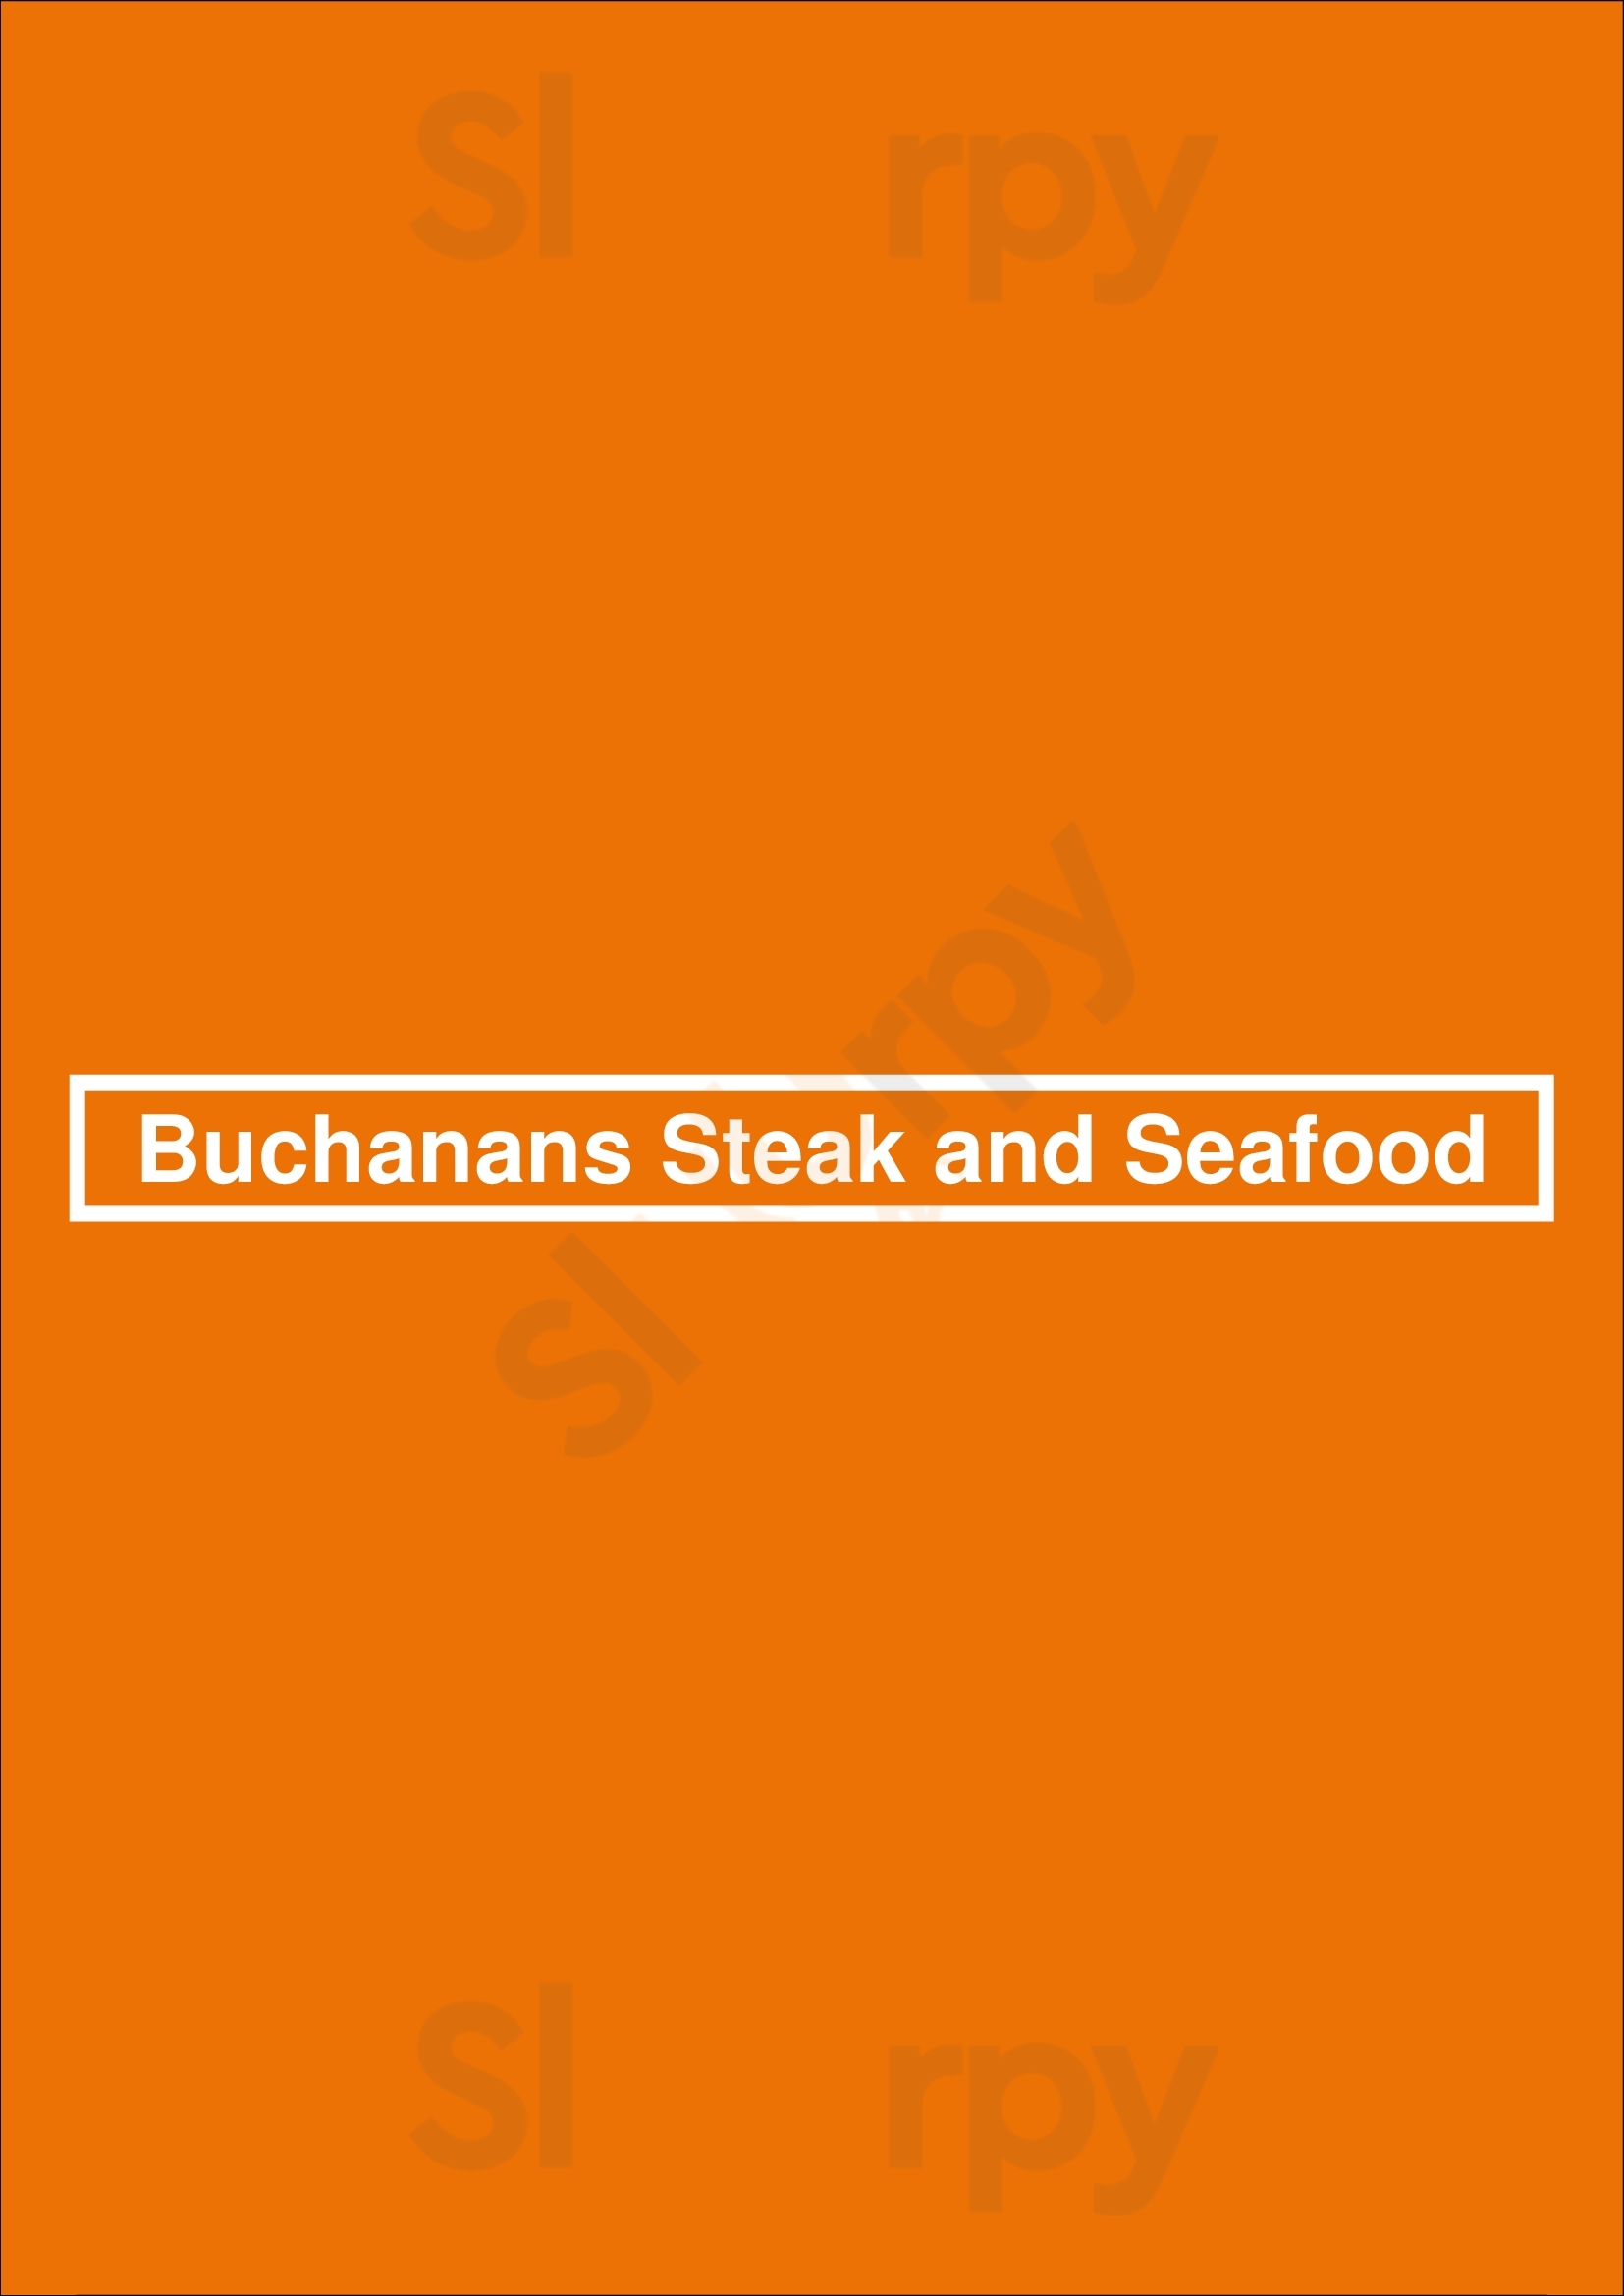 Buchanans Steak And Seafood Niagara Falls Menu - 1